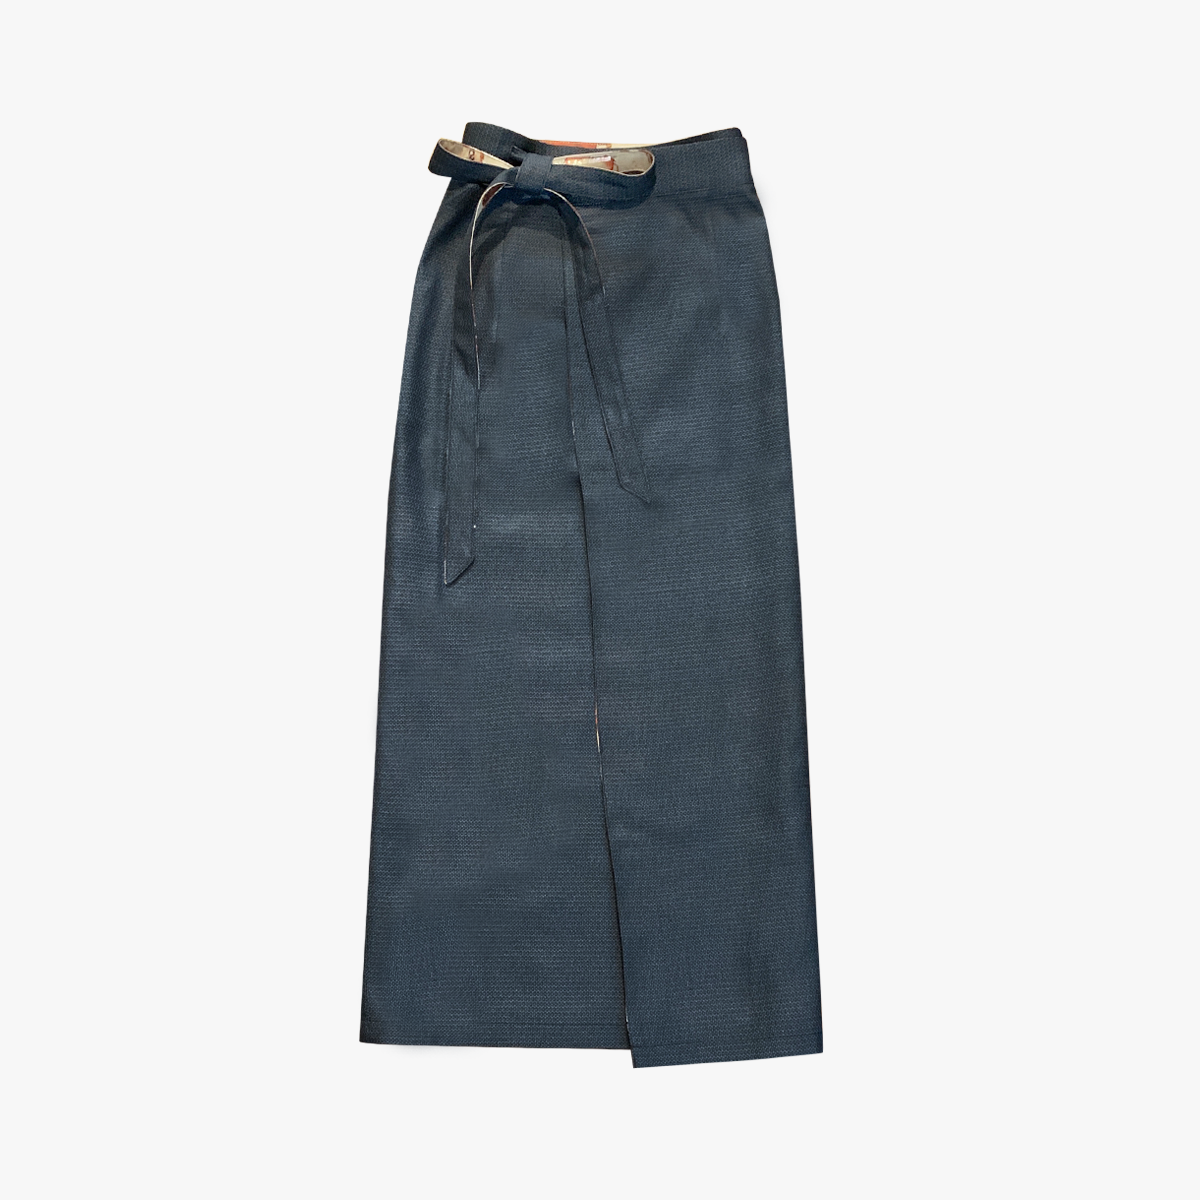 Reversible Skirt Long Straight - Autunno